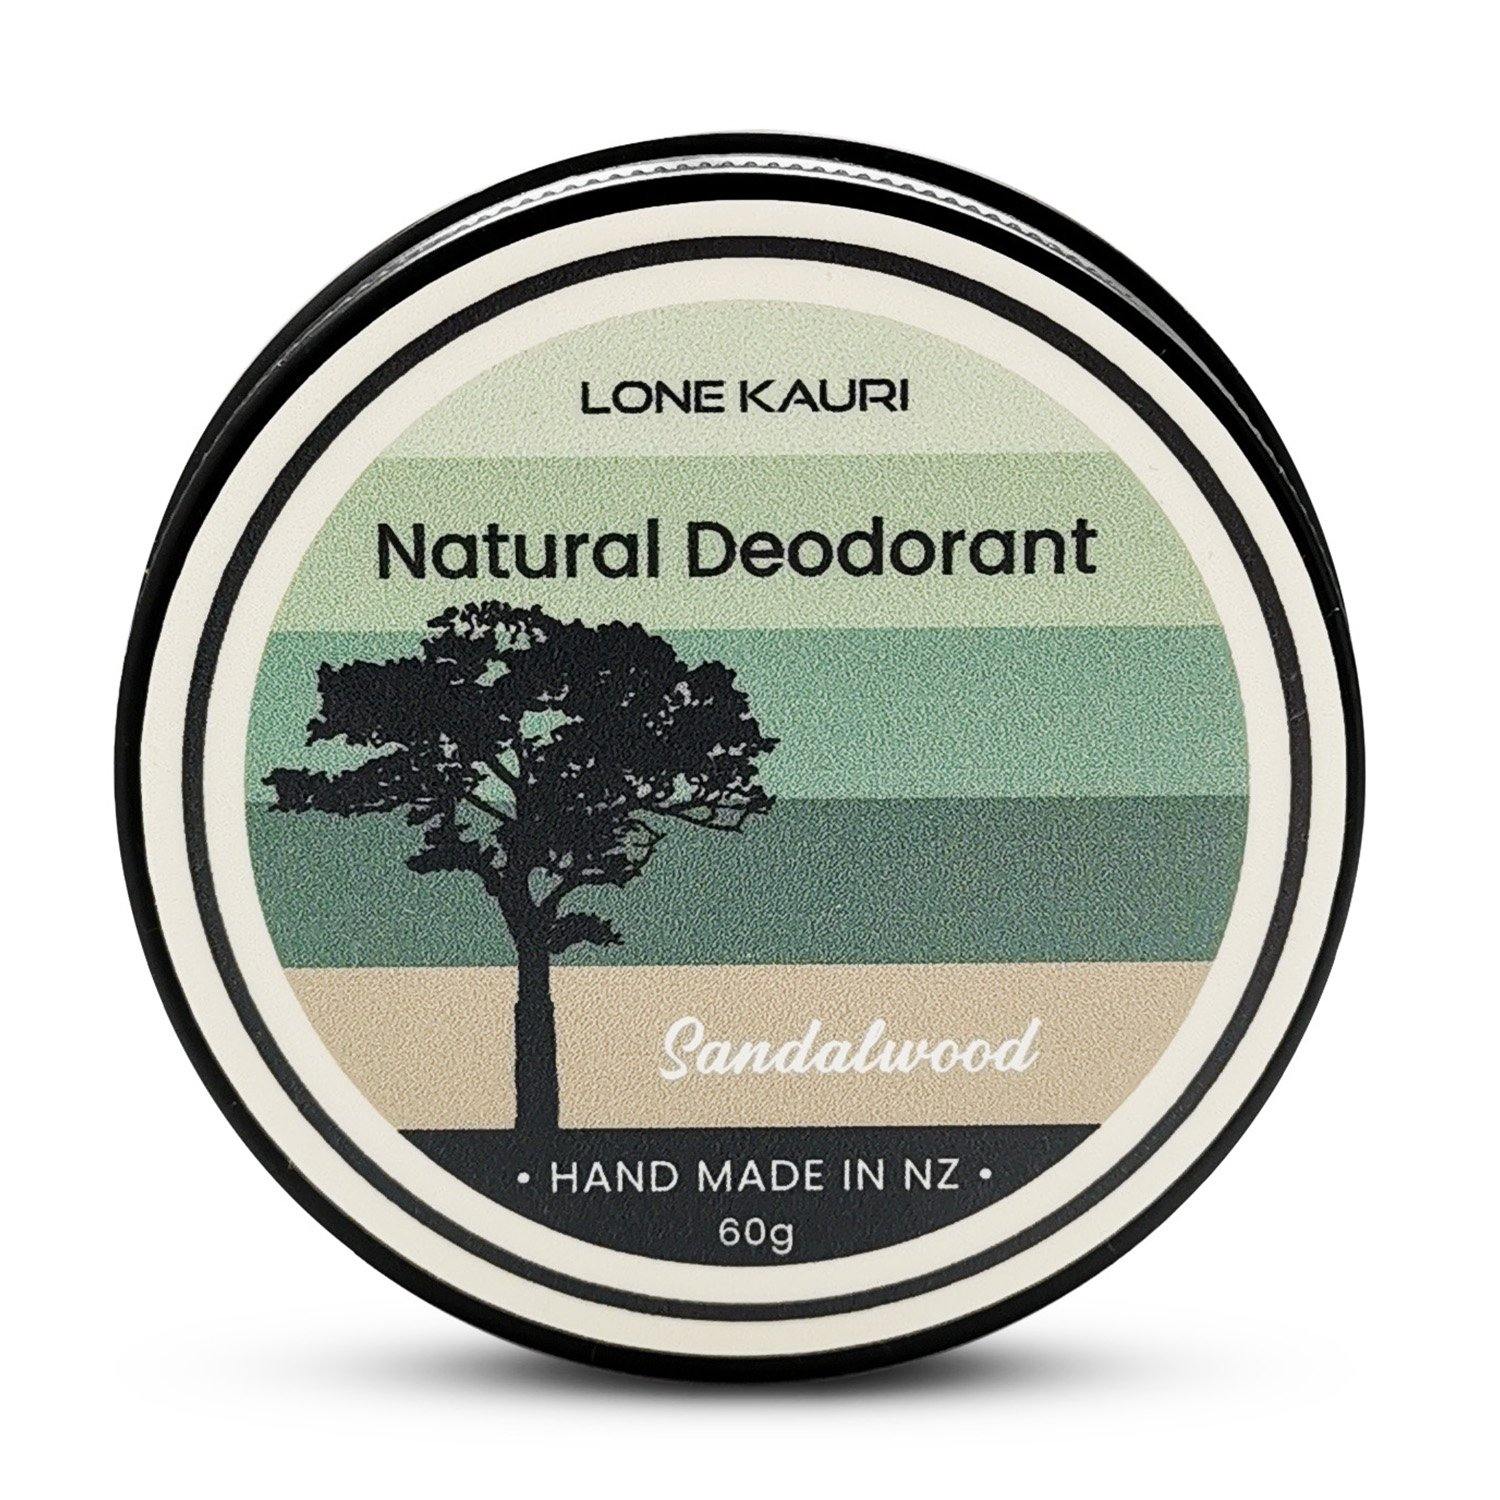 Natural Deodorant - Double Pack - Lone Kauri